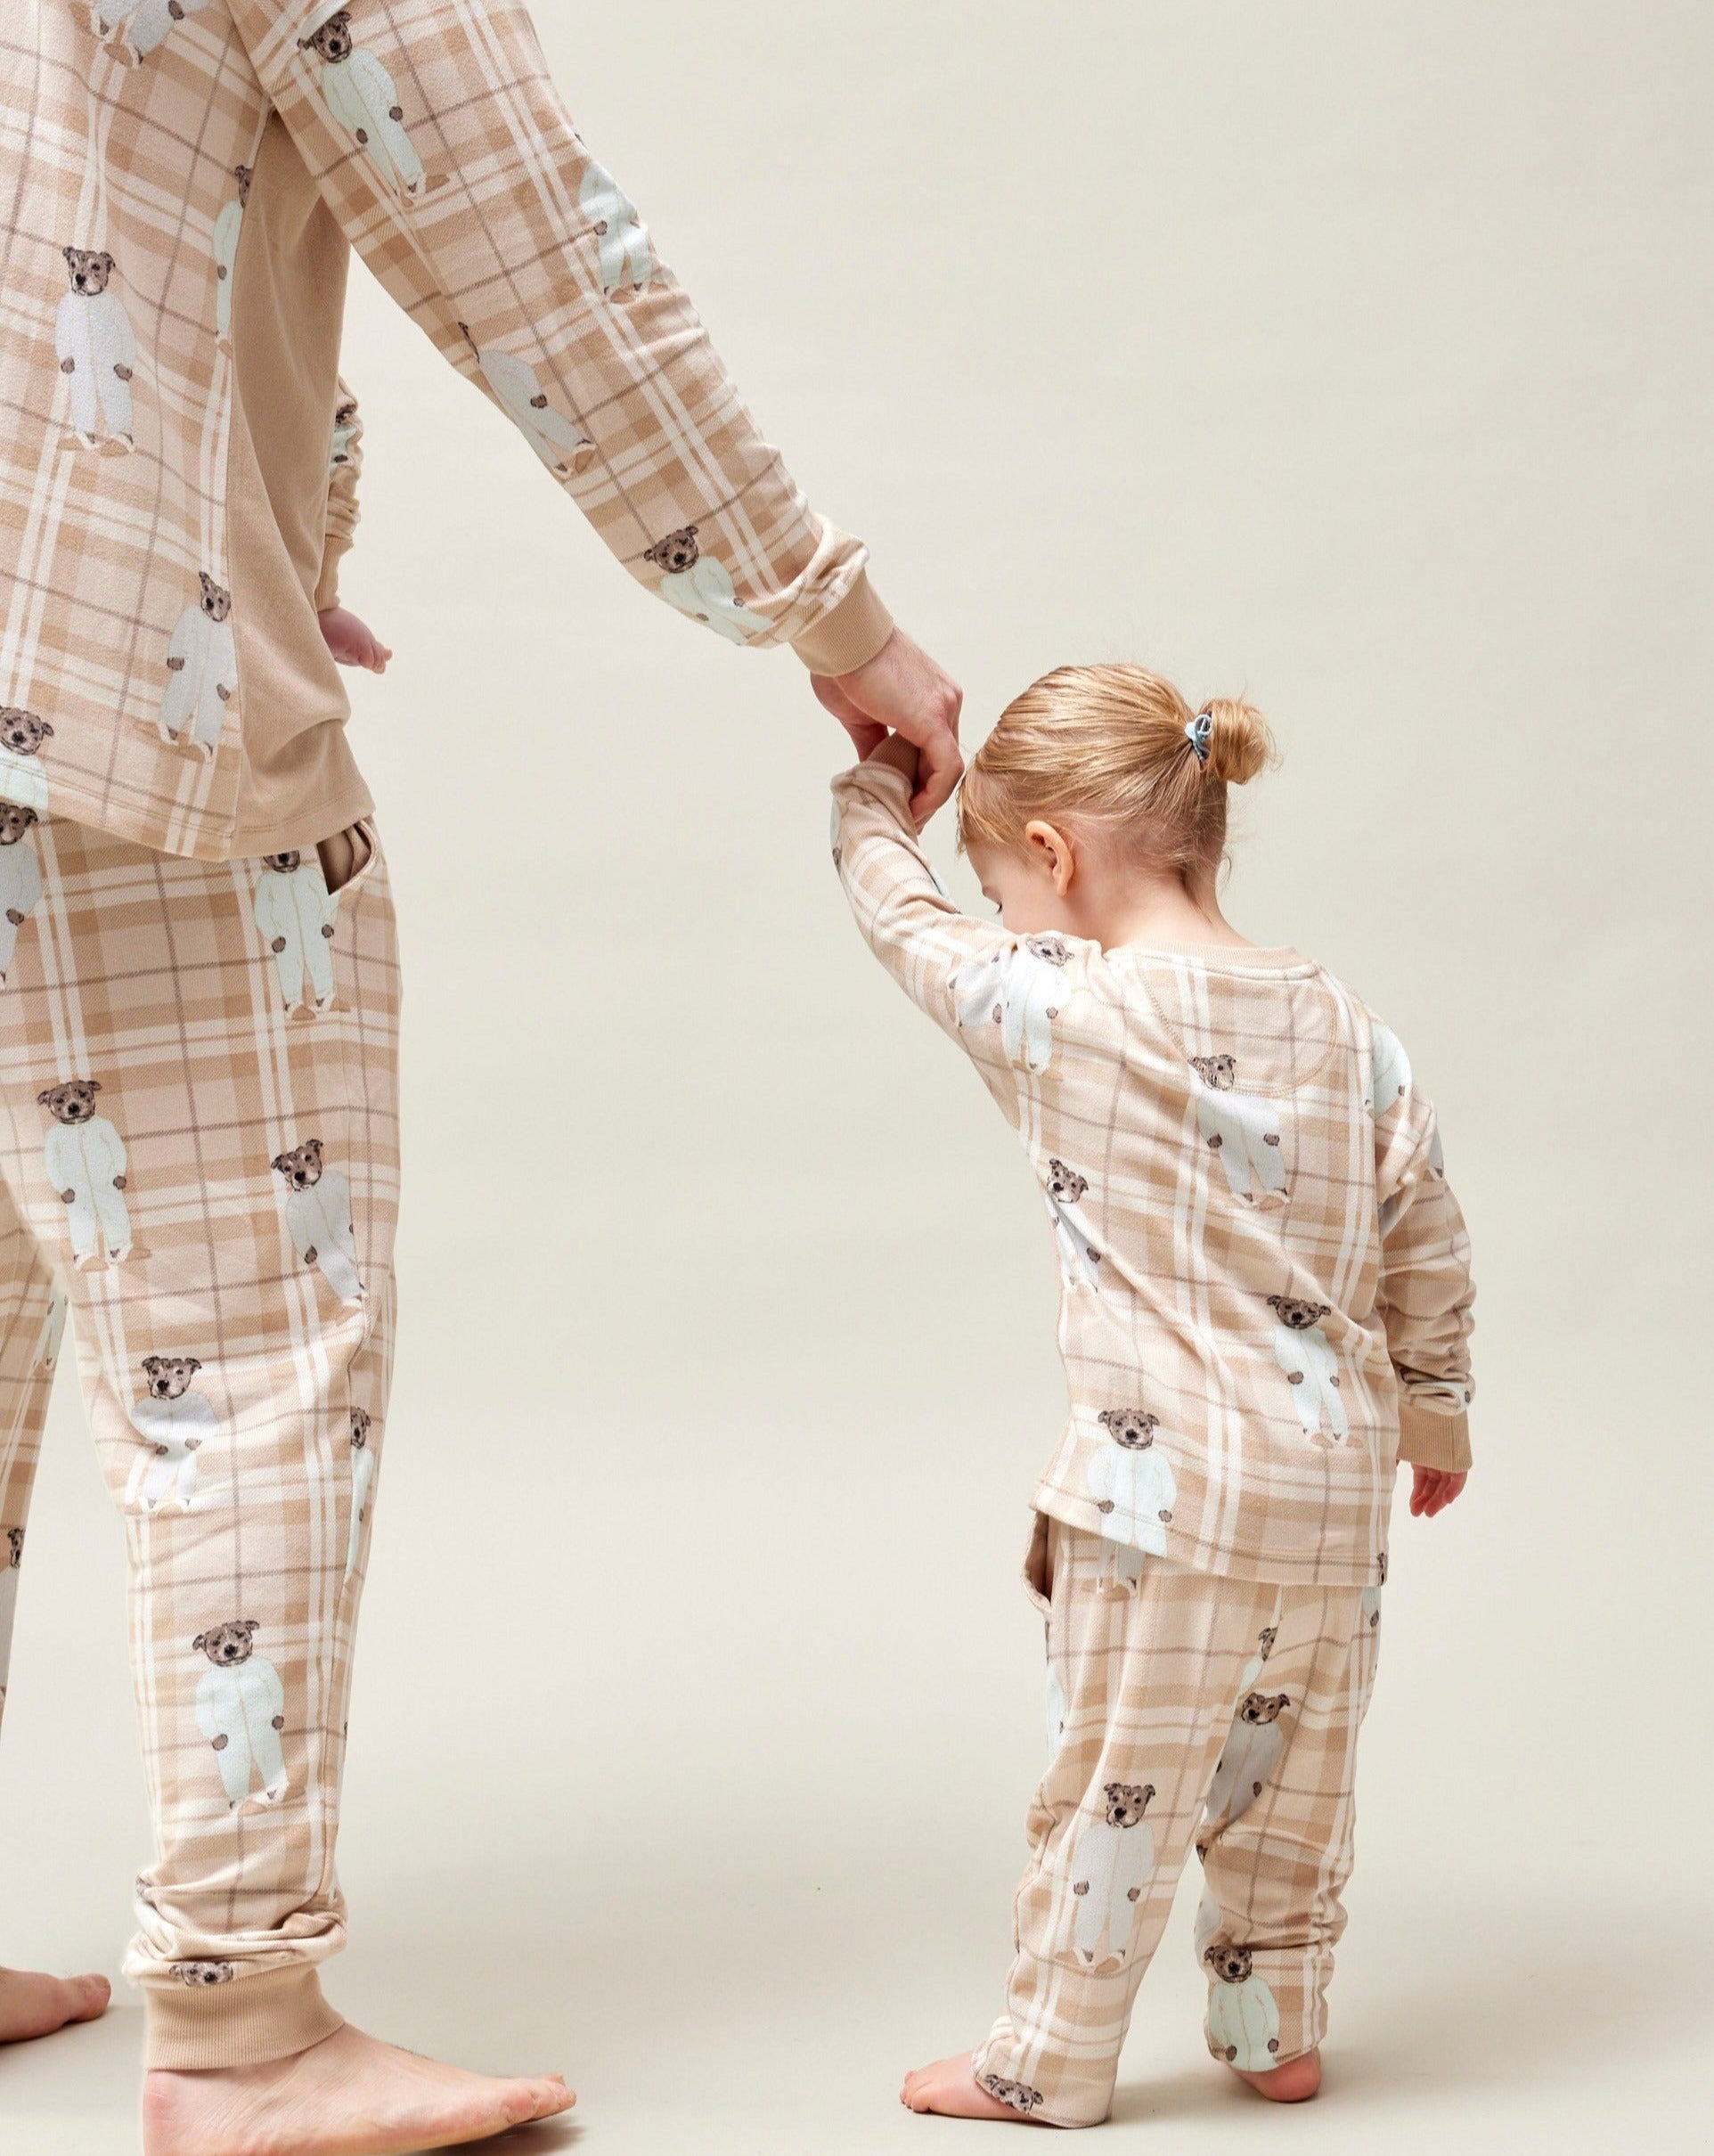 Darren and Phillip matching family pyjamas.